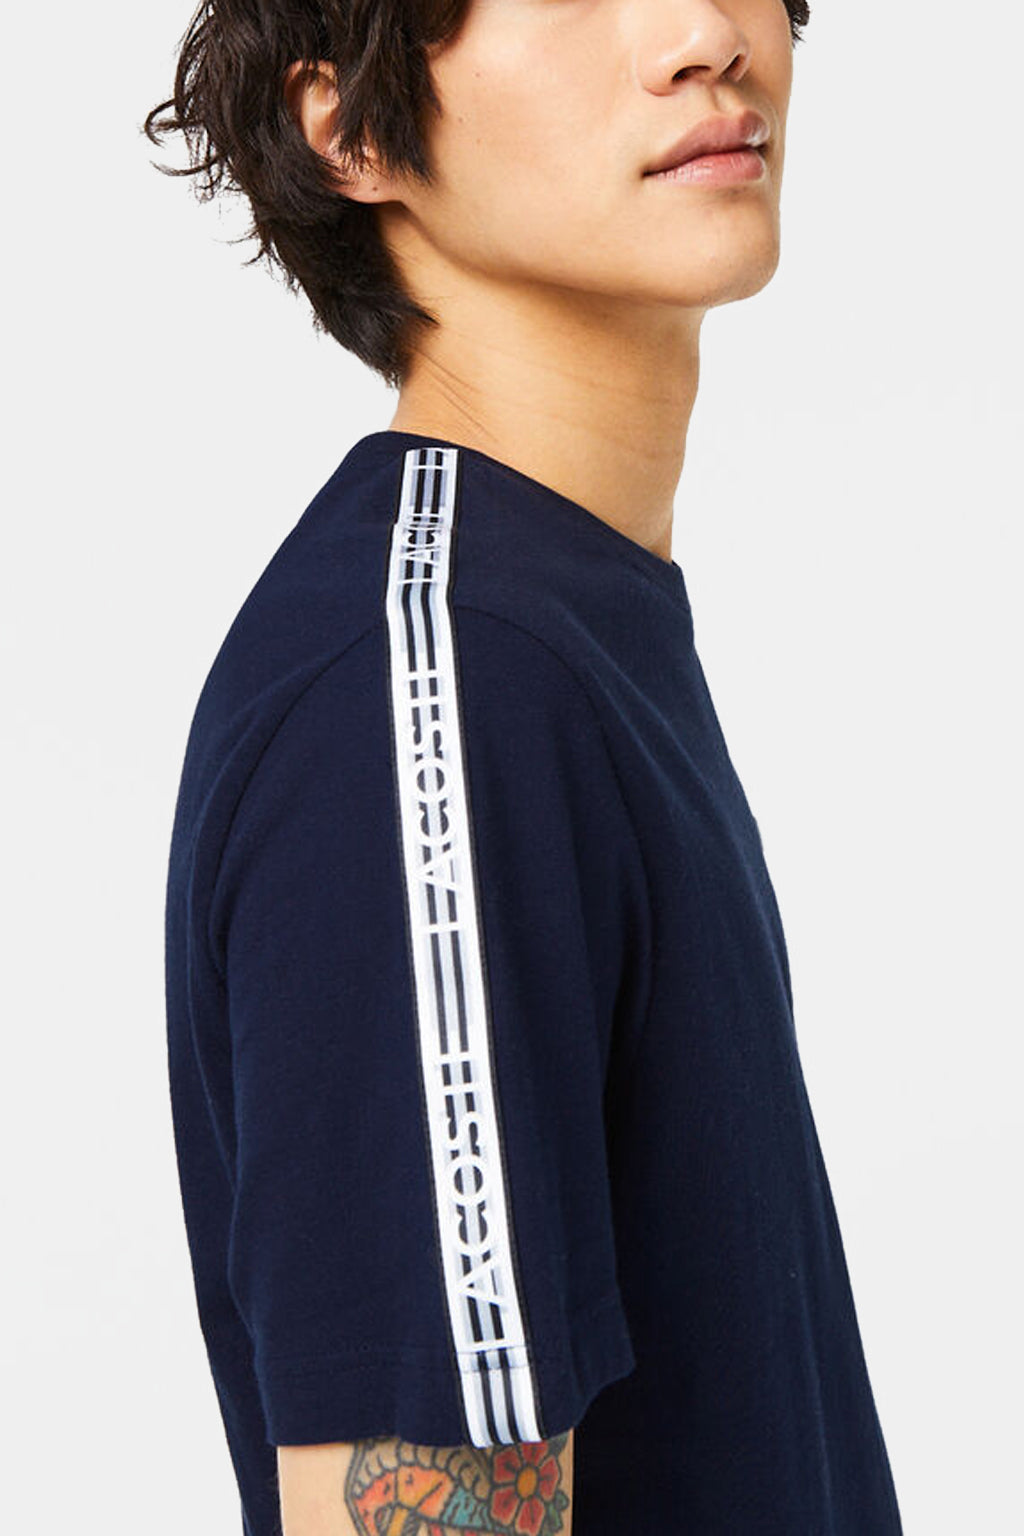 Lacoste - Men’s Lacoste Regular Fit Logo Stripe T-shirt